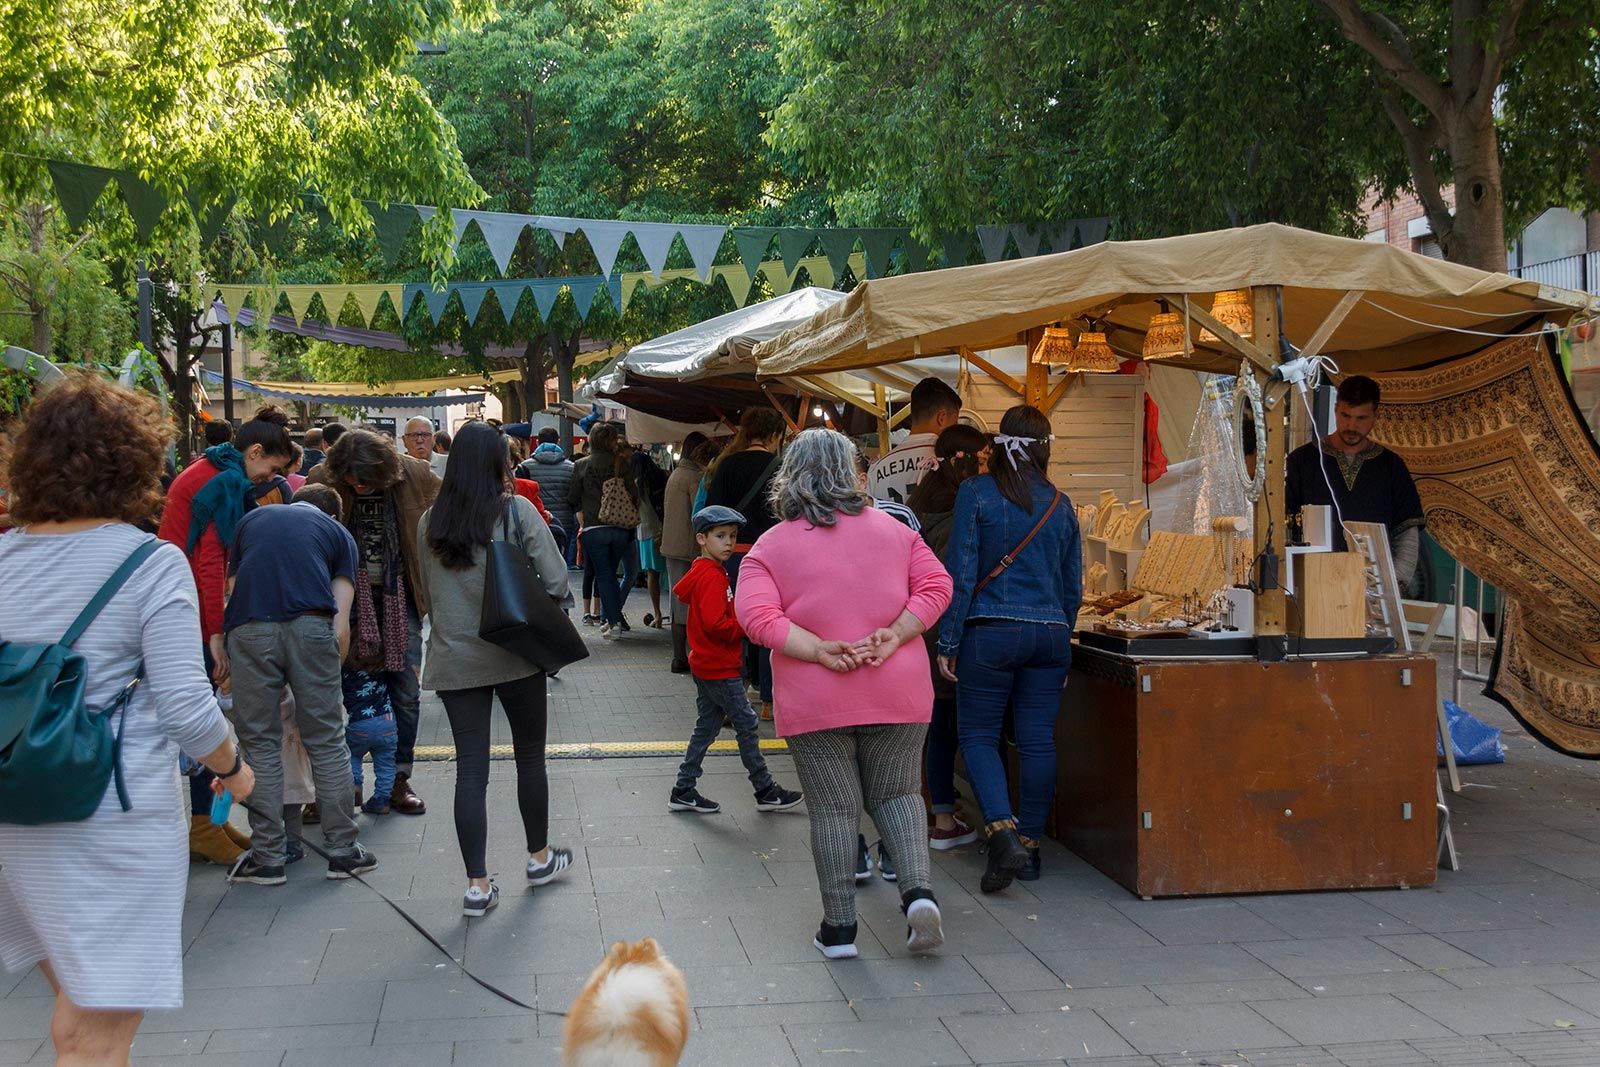 Food trucks i mercat medieval a l'Encabronada 2018. FOTO: Paula Galván